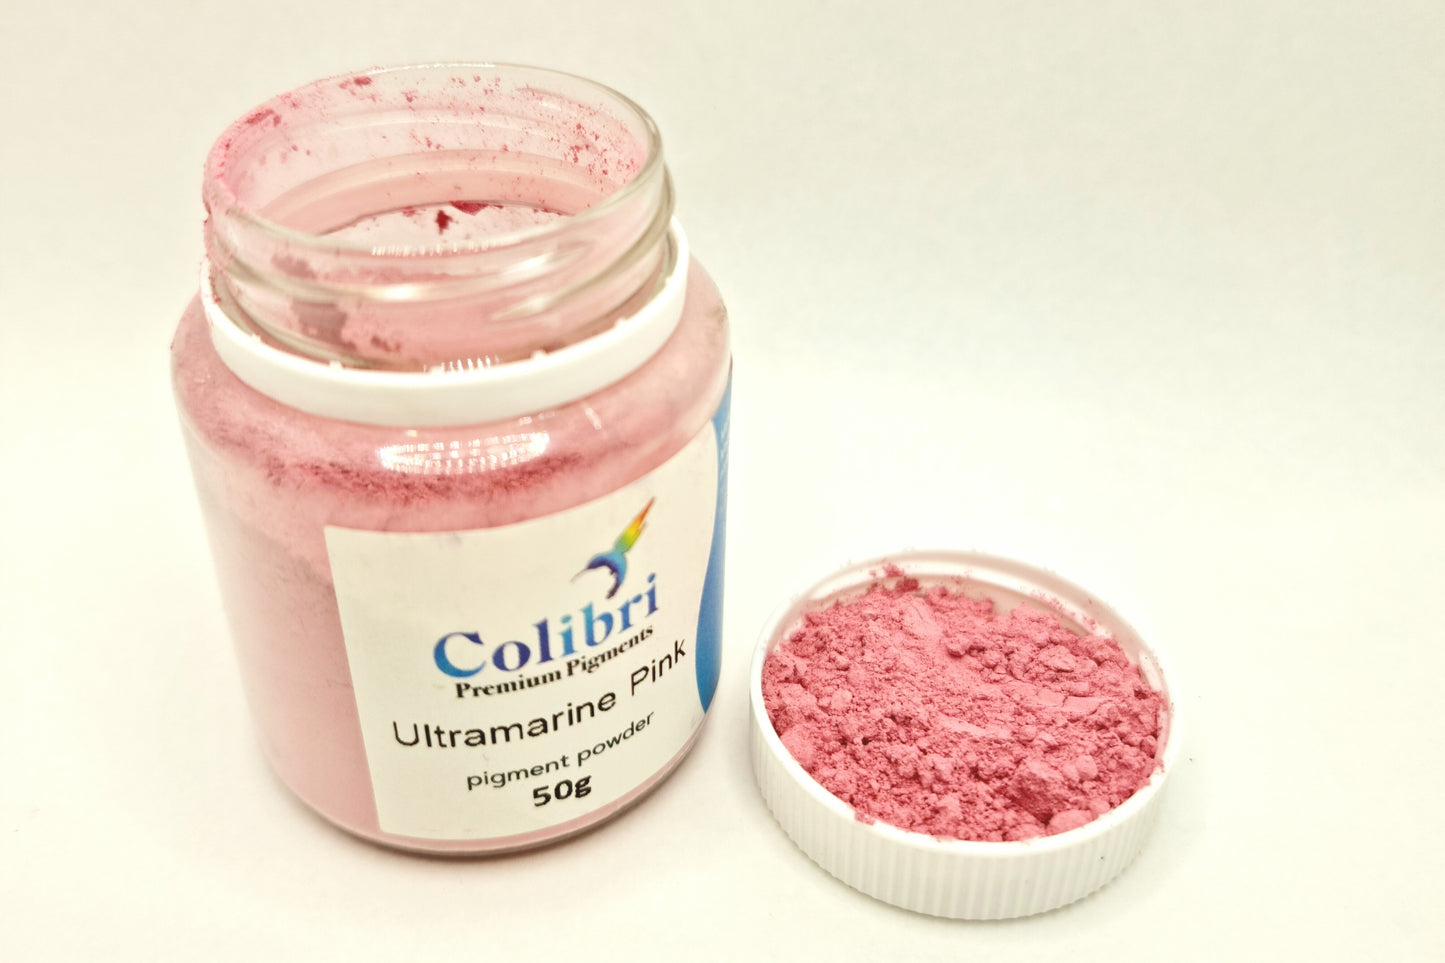 Ultramarine pink